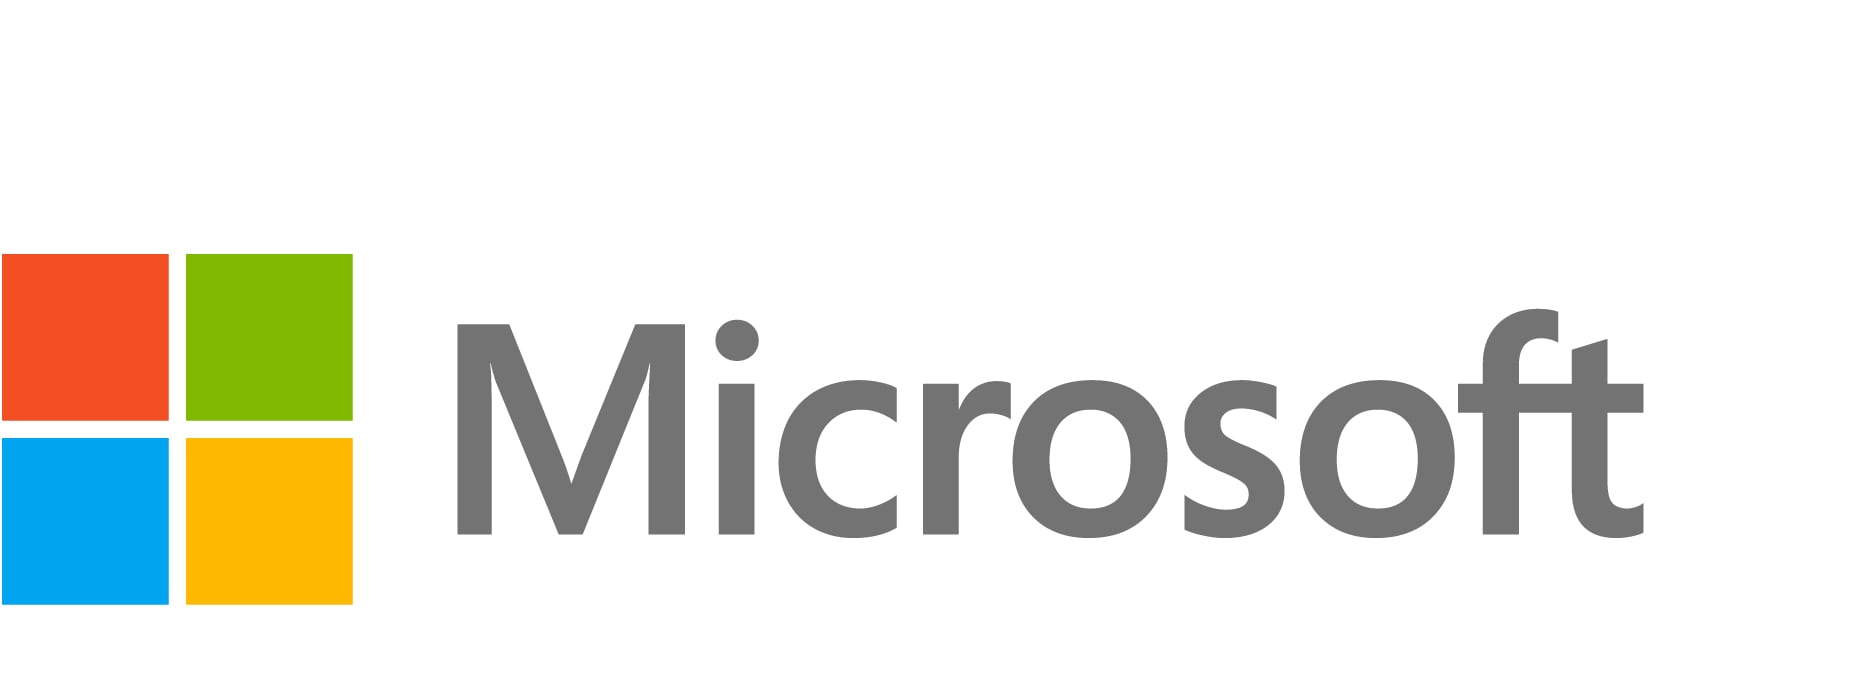 Microsoft Project - software assurance - 1 user